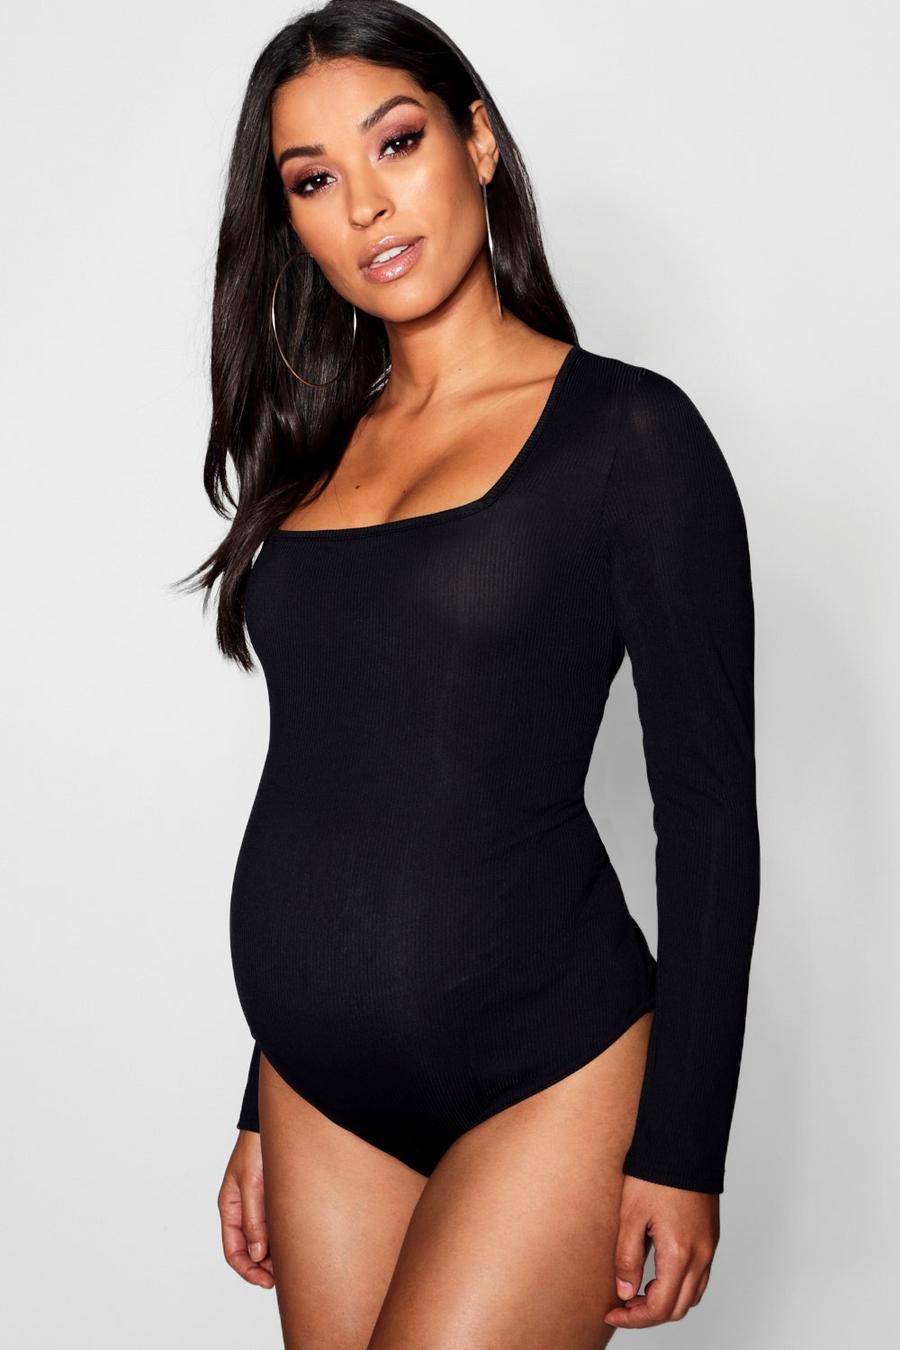 https://media.boohoo.com/i/boohoo/bzz47686_black_xl/female-black-maternity-long-sleeve-rib-square-neck-bodysuit/?w=900&qlt=default&fmt.jp2.qlt=70&fmt=auto&sm=fit